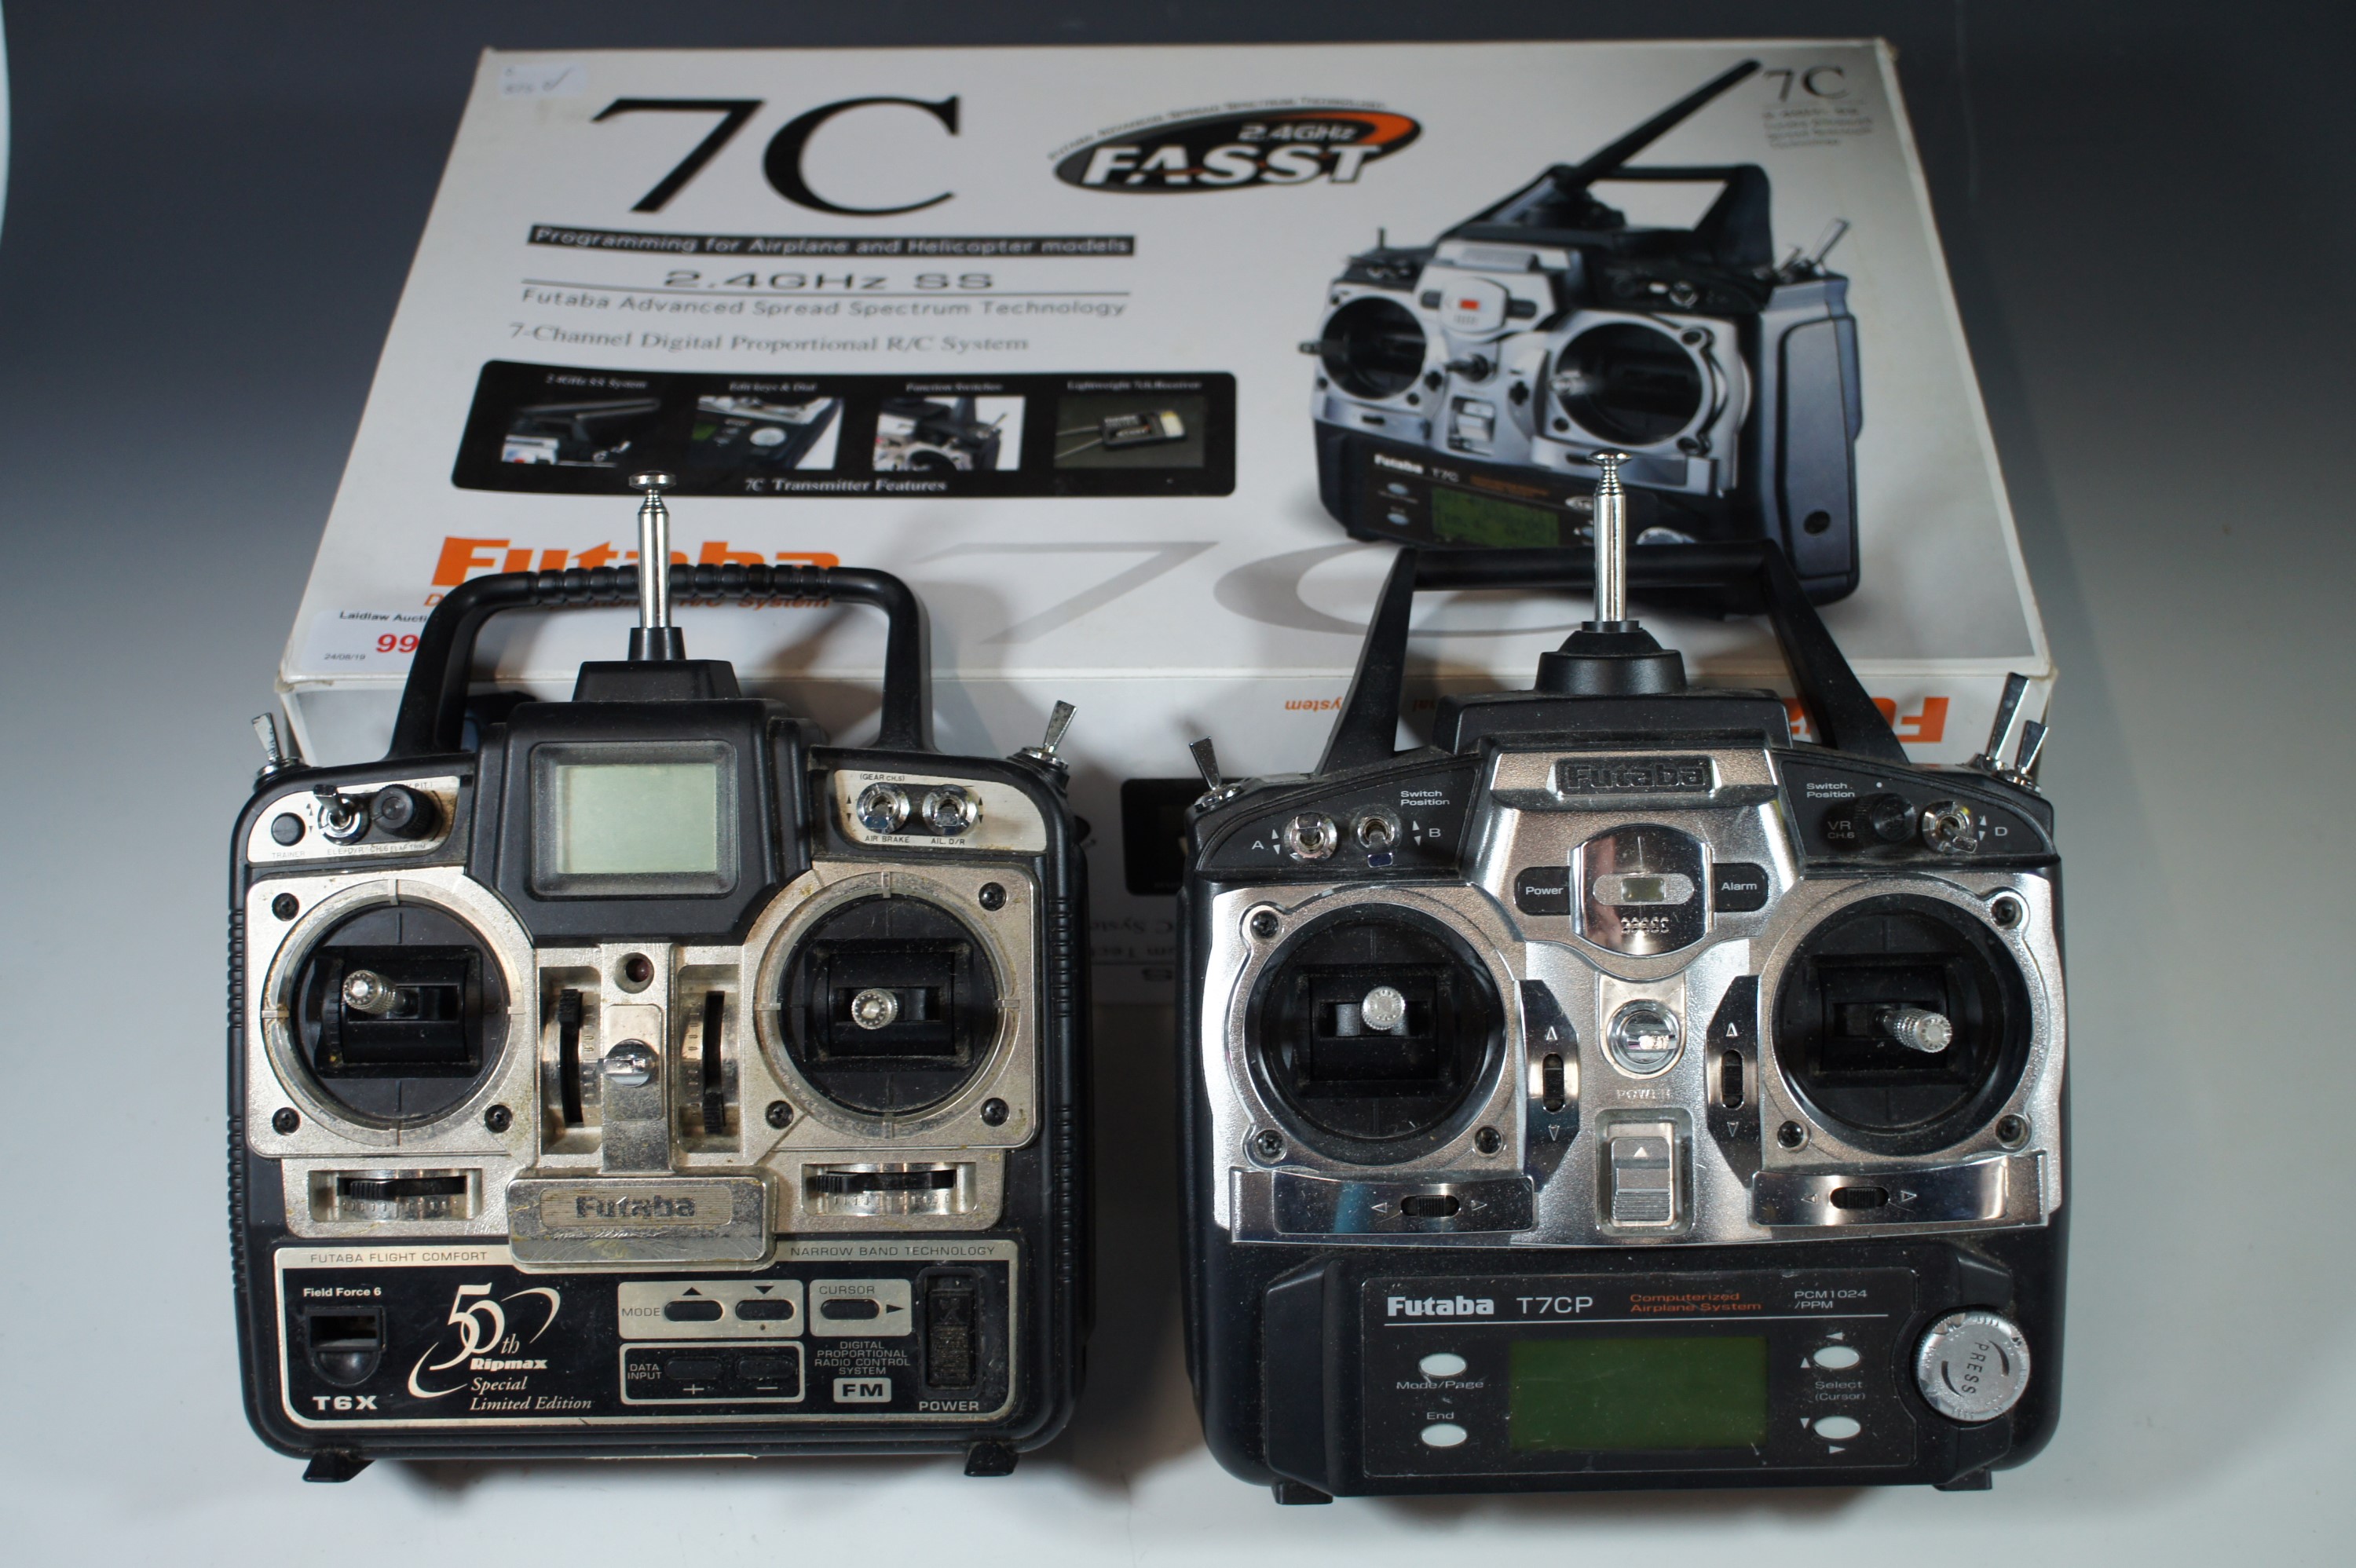 Three radio control handsets, Futaba T7C, Futaba T7CP and a T6X